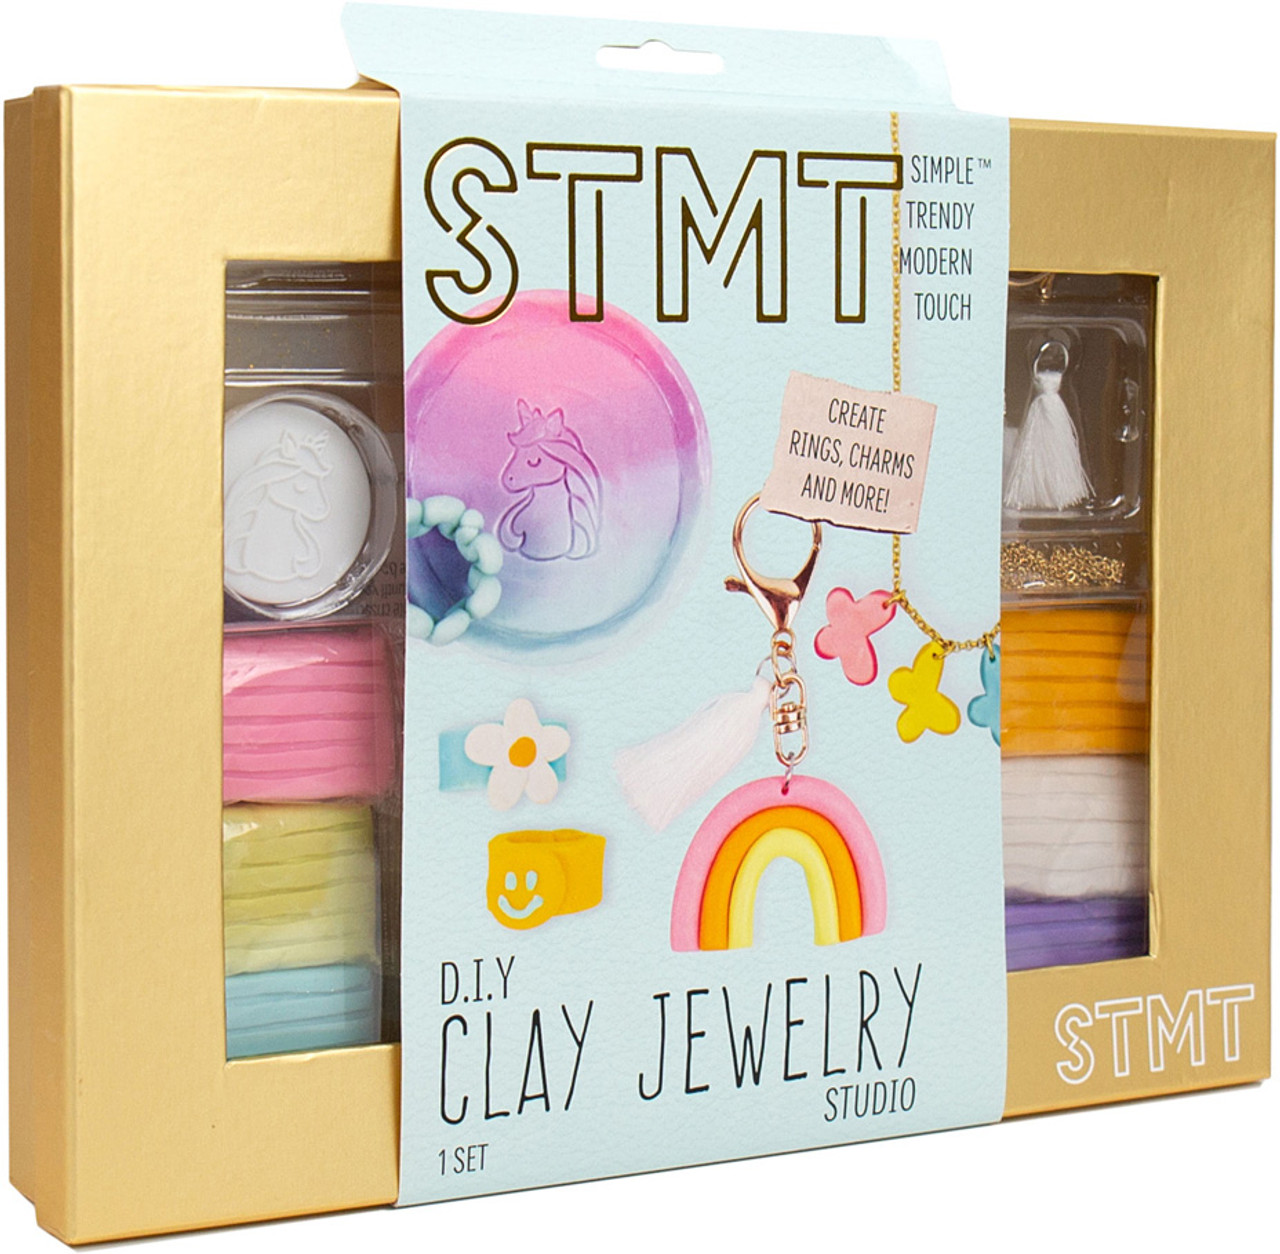 STMT D.I.Y Clay Jewelry Studio 1